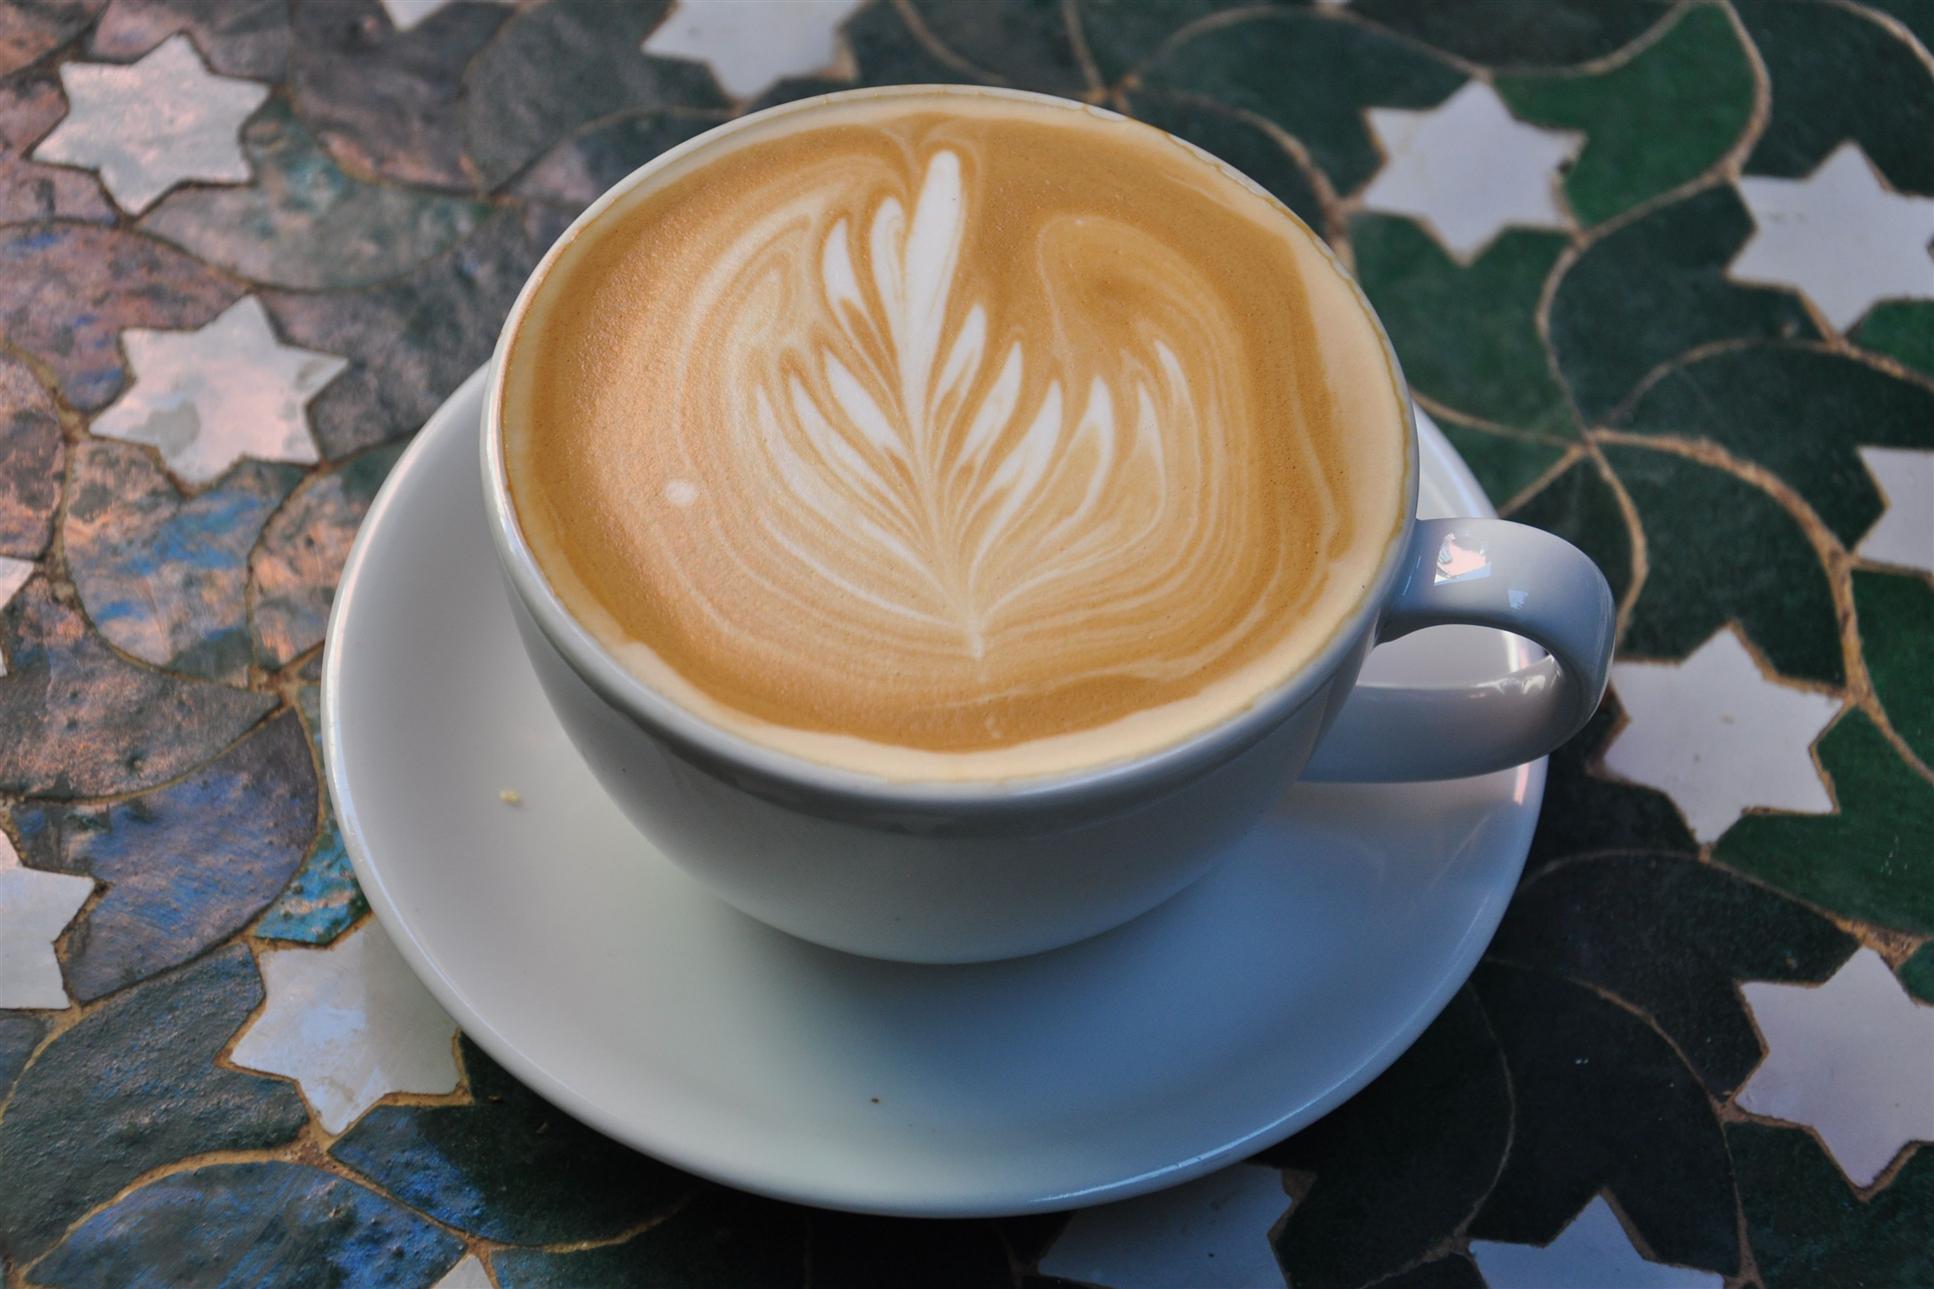 A latte with a fern-leaf motif in the milk